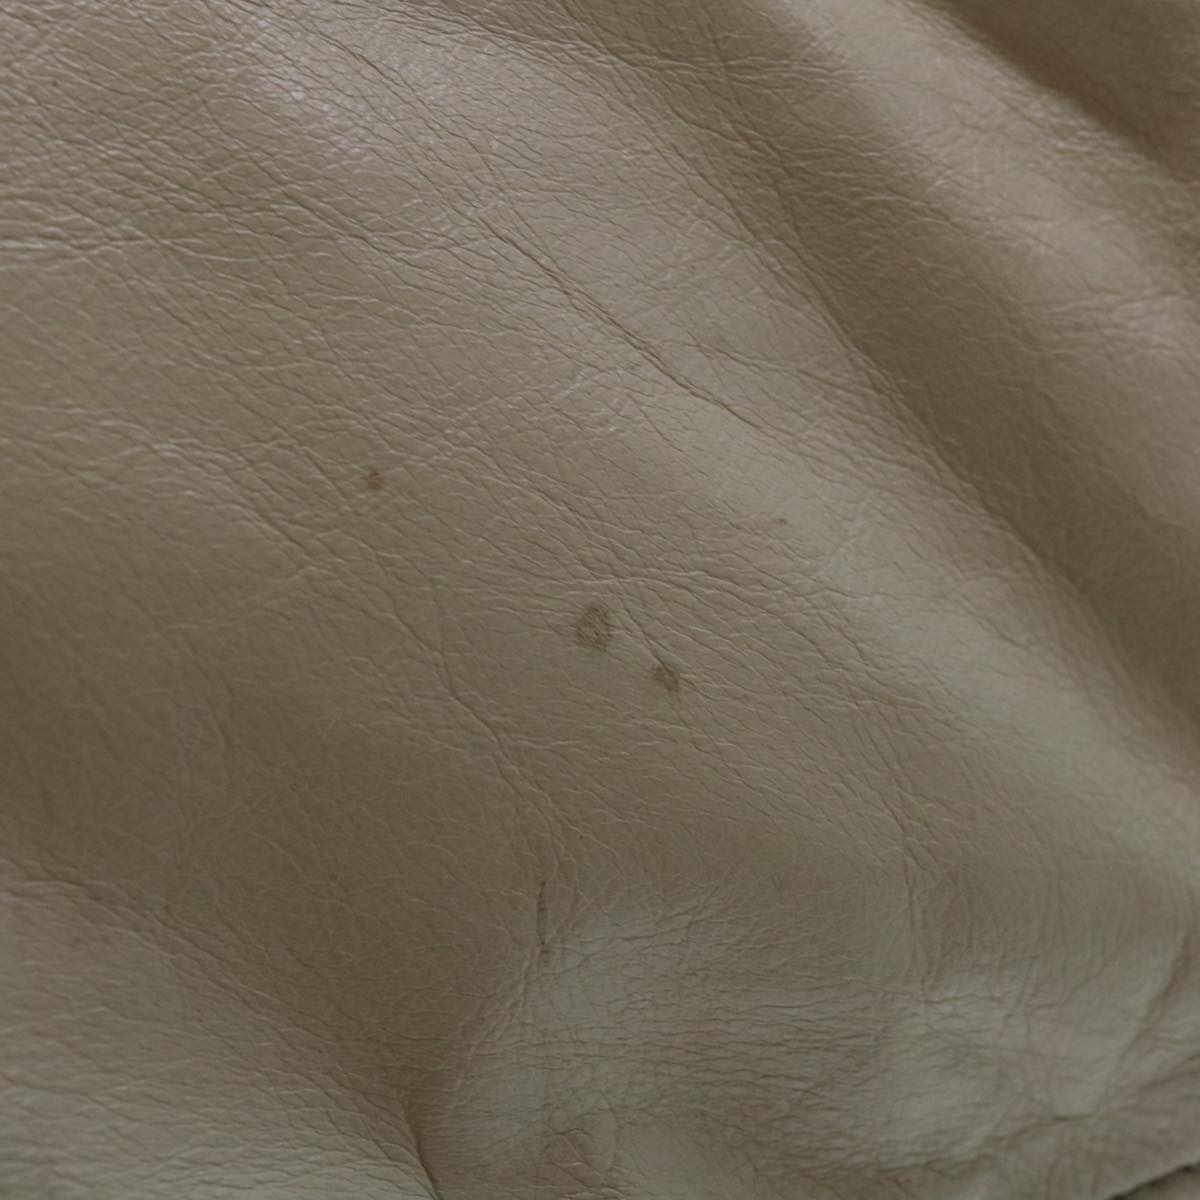 Miu Miu Hand Bag Leather 2way White Auth 68781 - 0